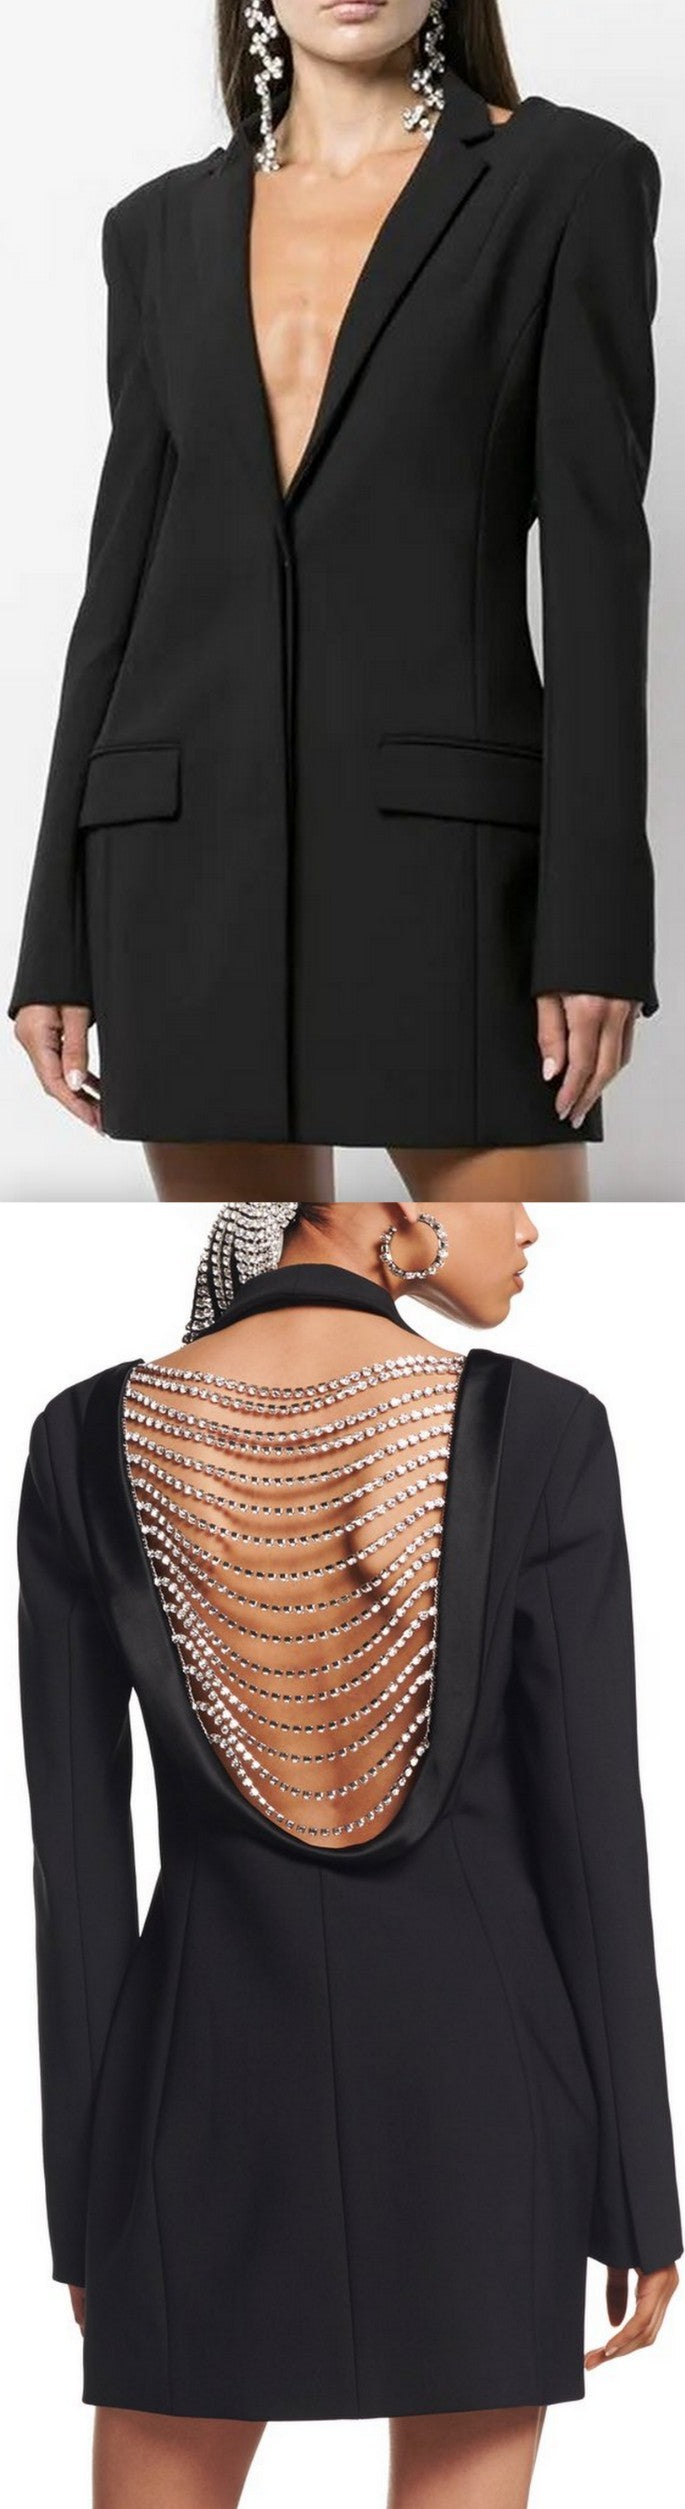 Backless Draped Crystal Blazer Dress